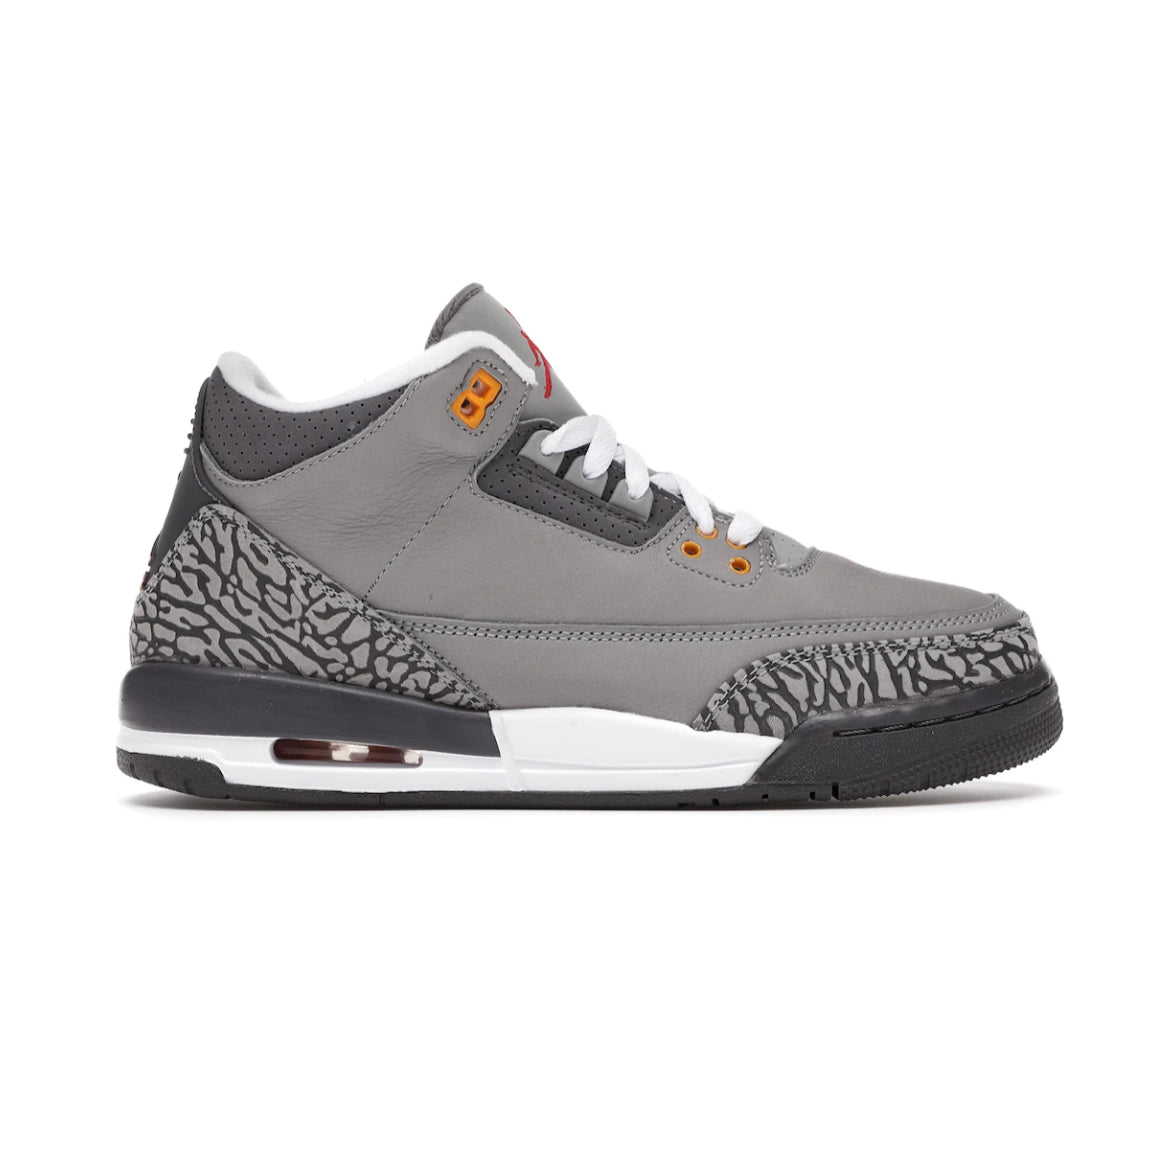 Jordan 3 Retro Cool Grey (GS) 398614-012